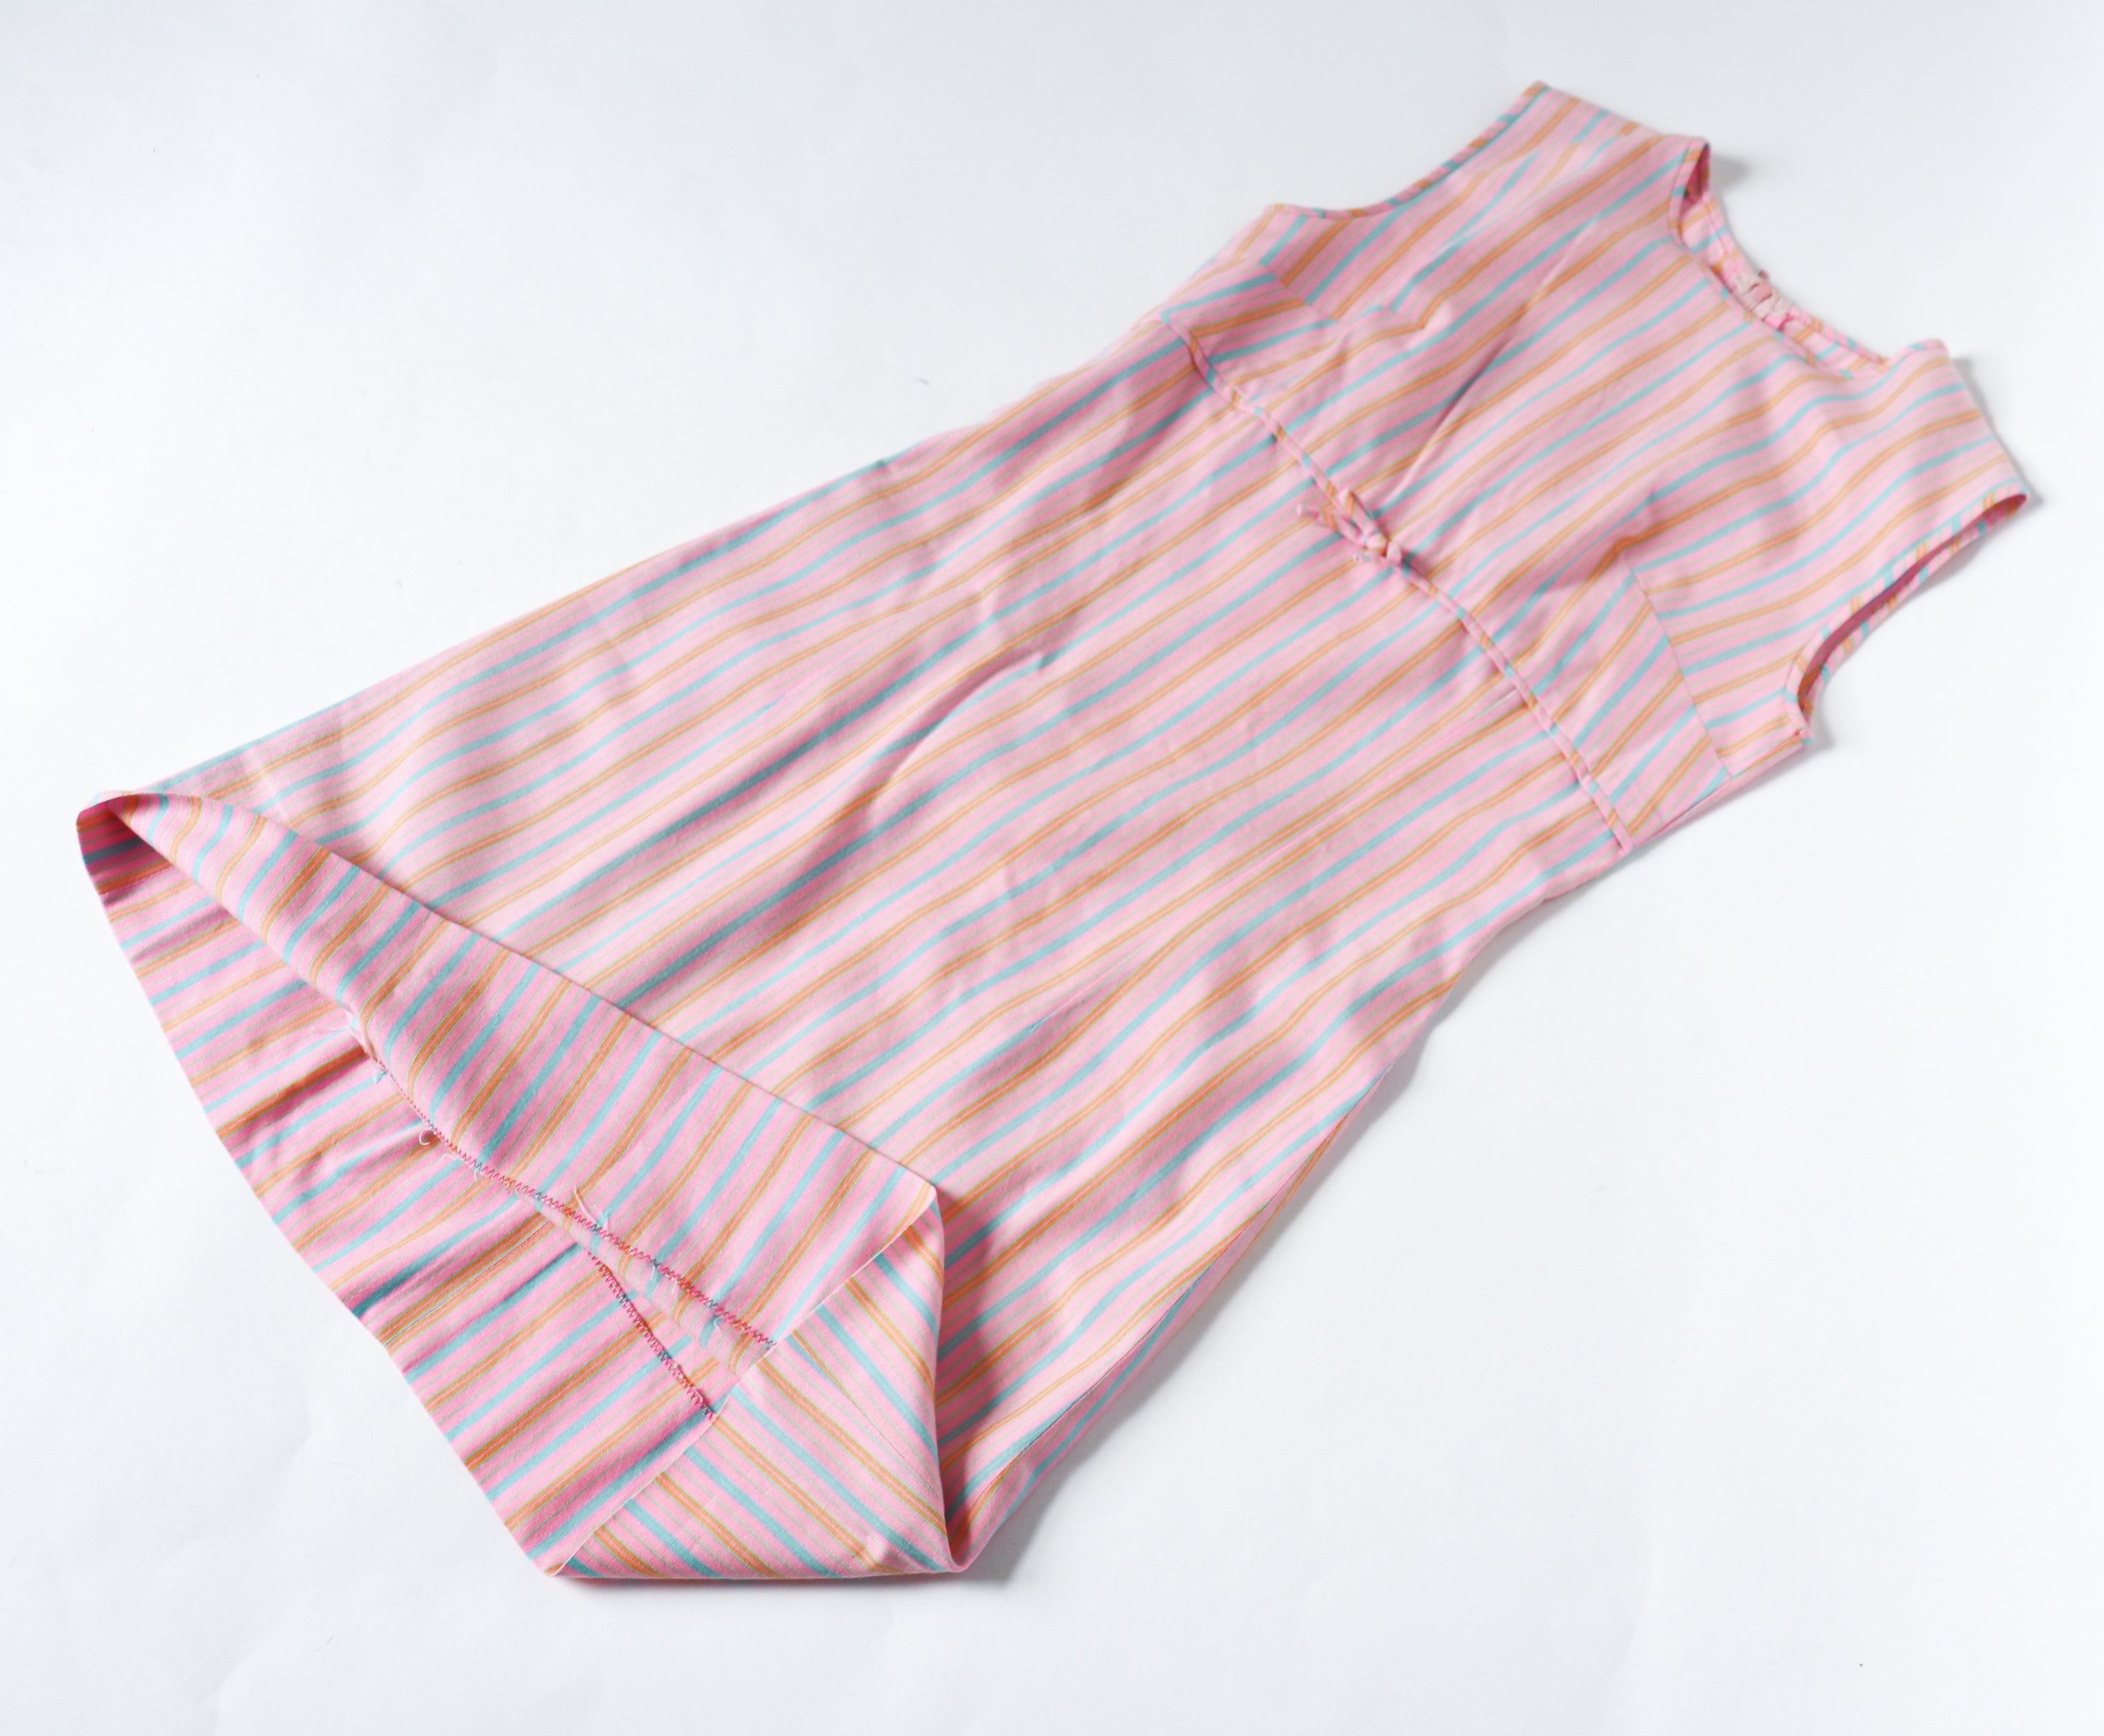 1960s Vintage Mini Dress - Pink Striped Dralon - Sleeveless - XXS - UK 6 / 8